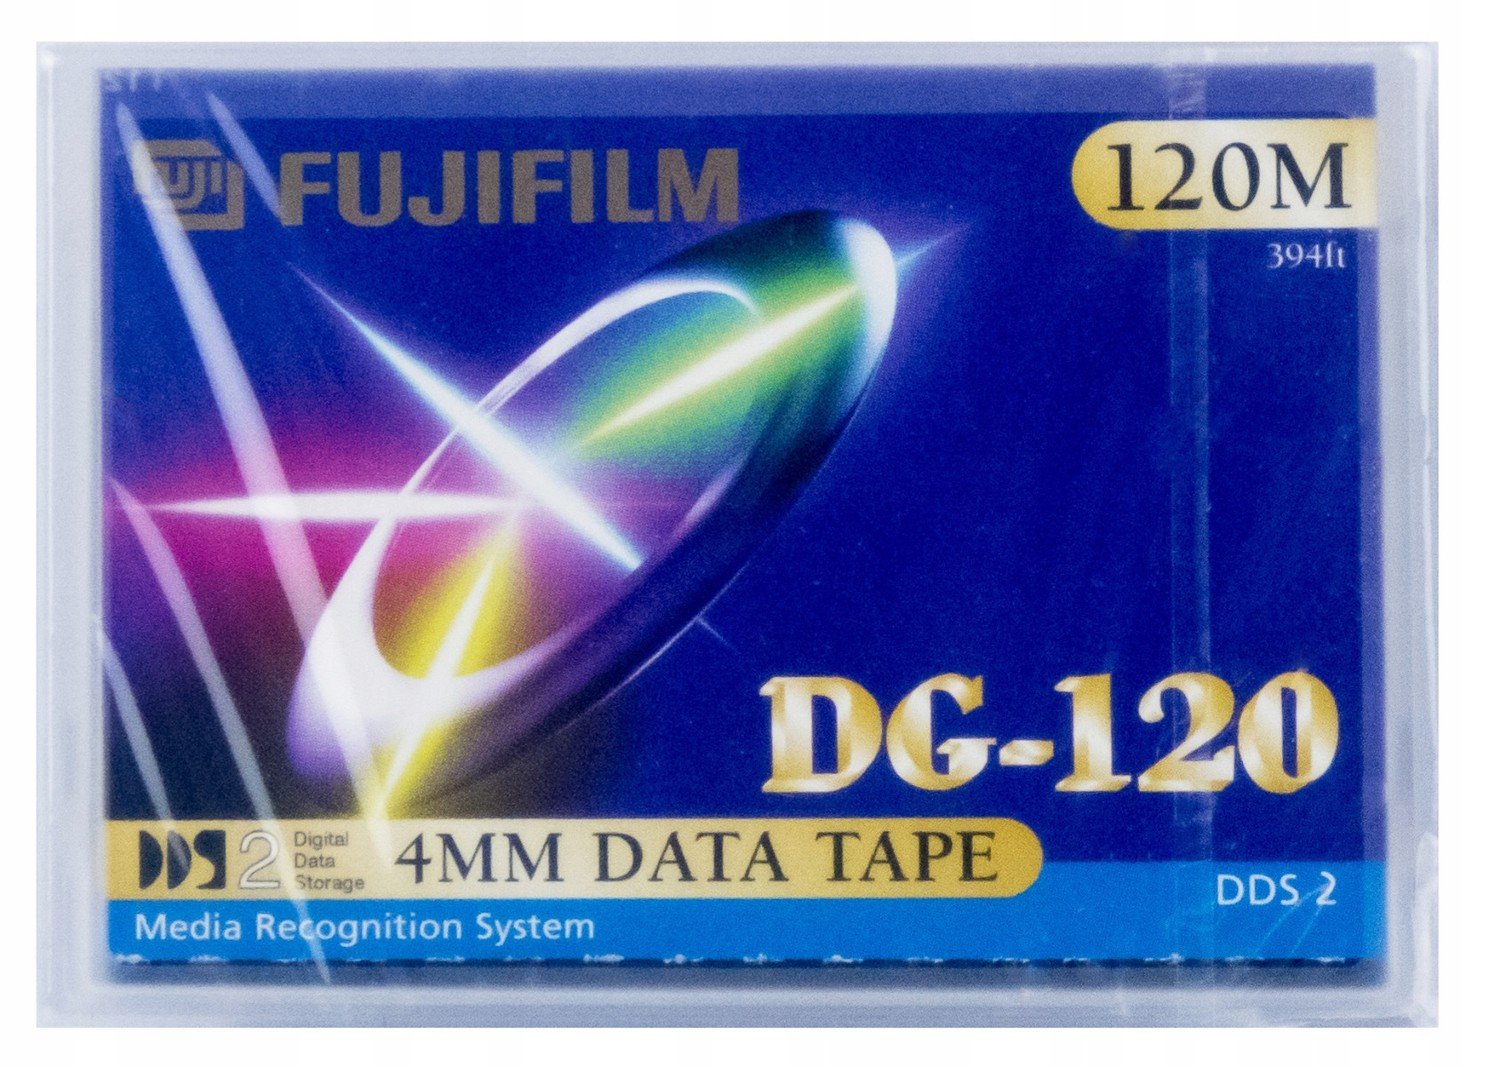 Datová Karta Fujifilm DG-120 DDS-2 120m 4mm